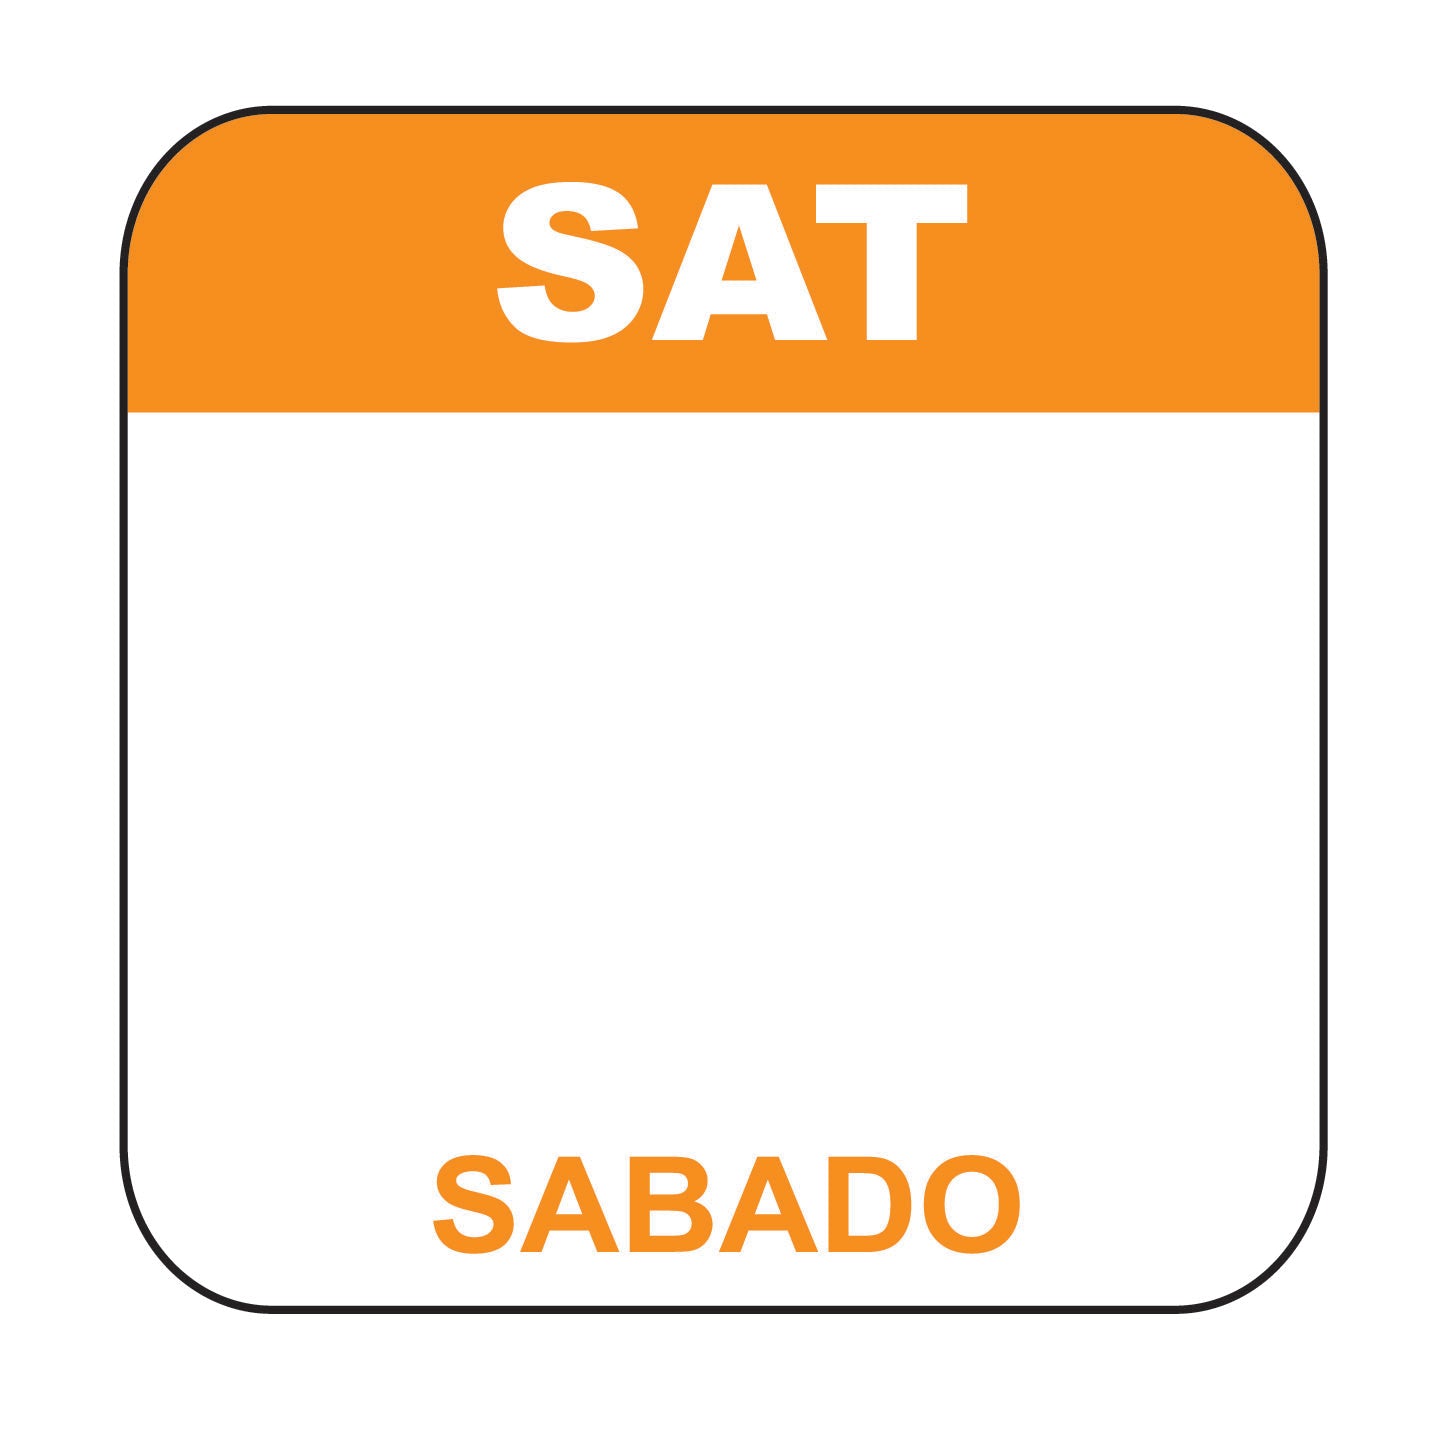 Saturday - Sabado 1" x 1" Dissolvable Date Label